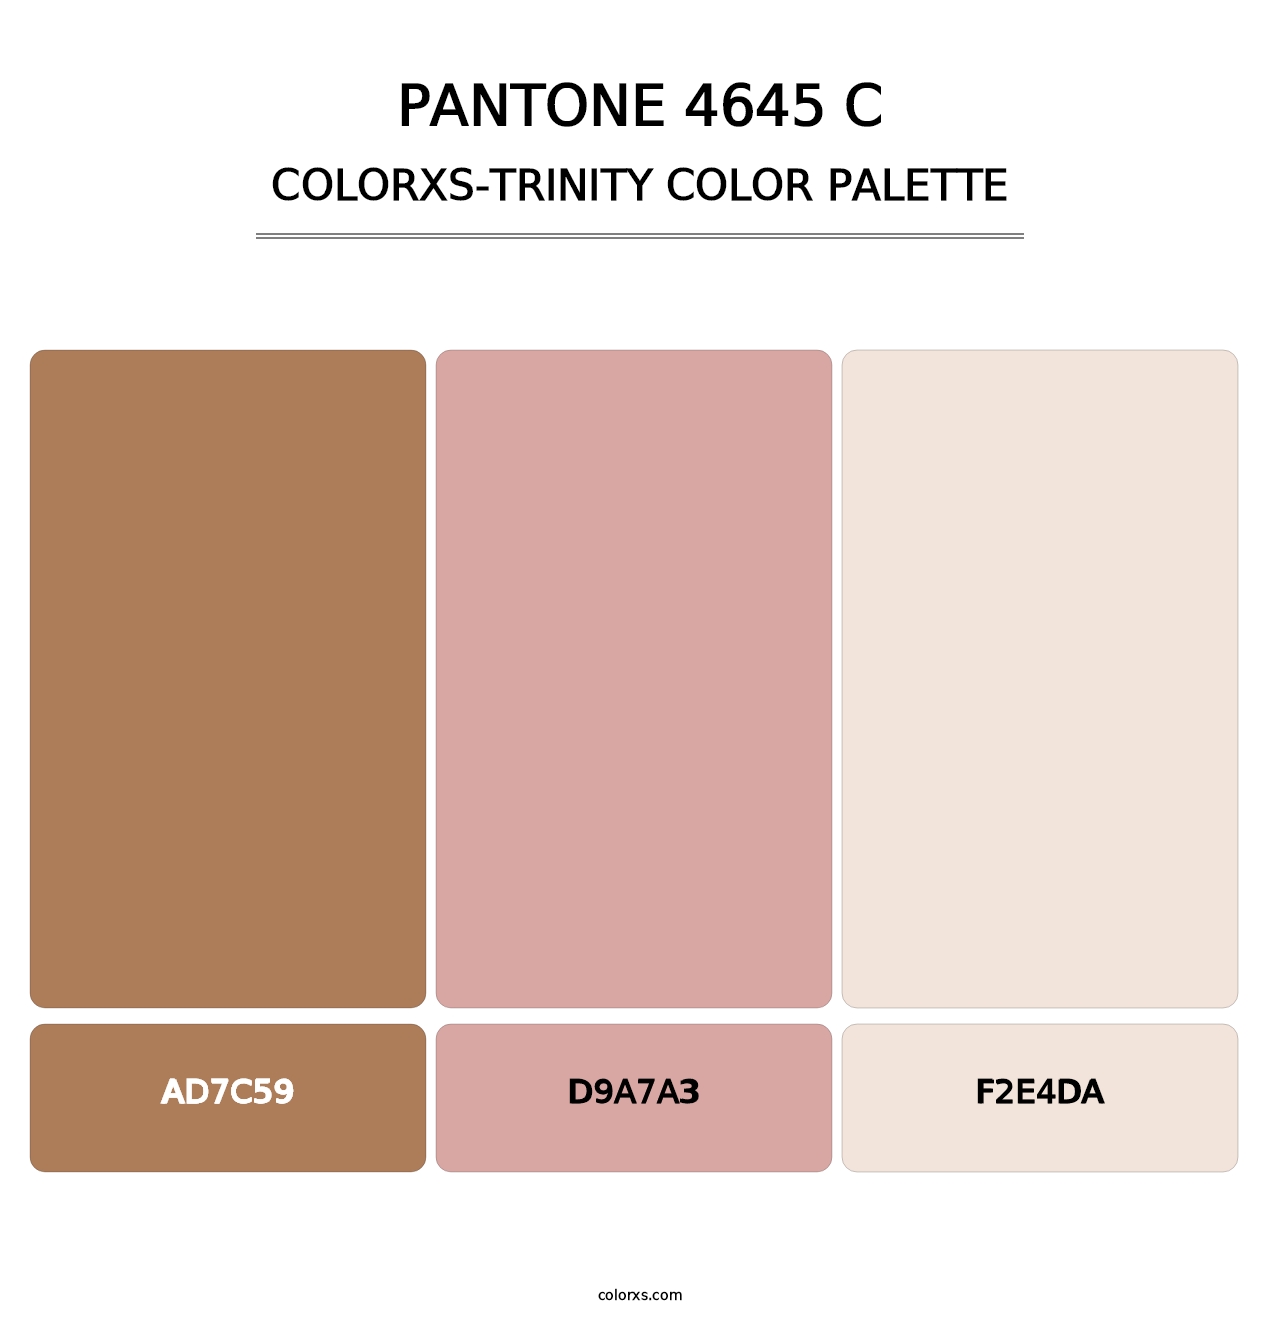 PANTONE 4645 C - Colorxs Trinity Palette